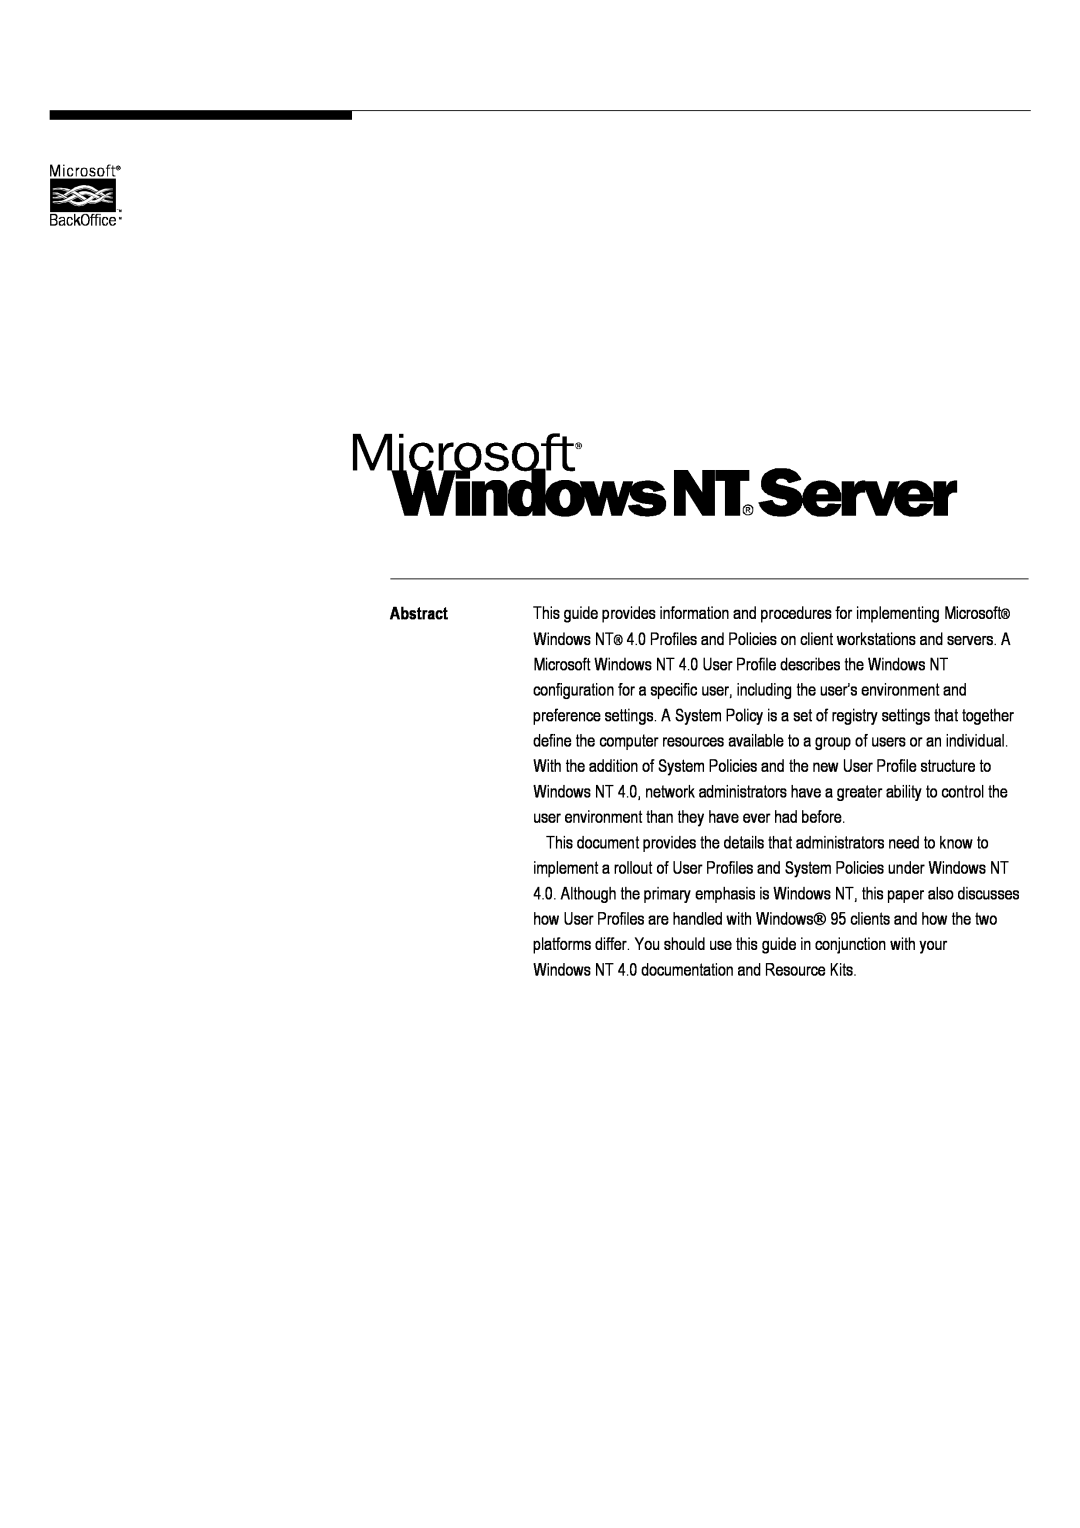 Microsoft Windows NT 4.0 manual Abstract 